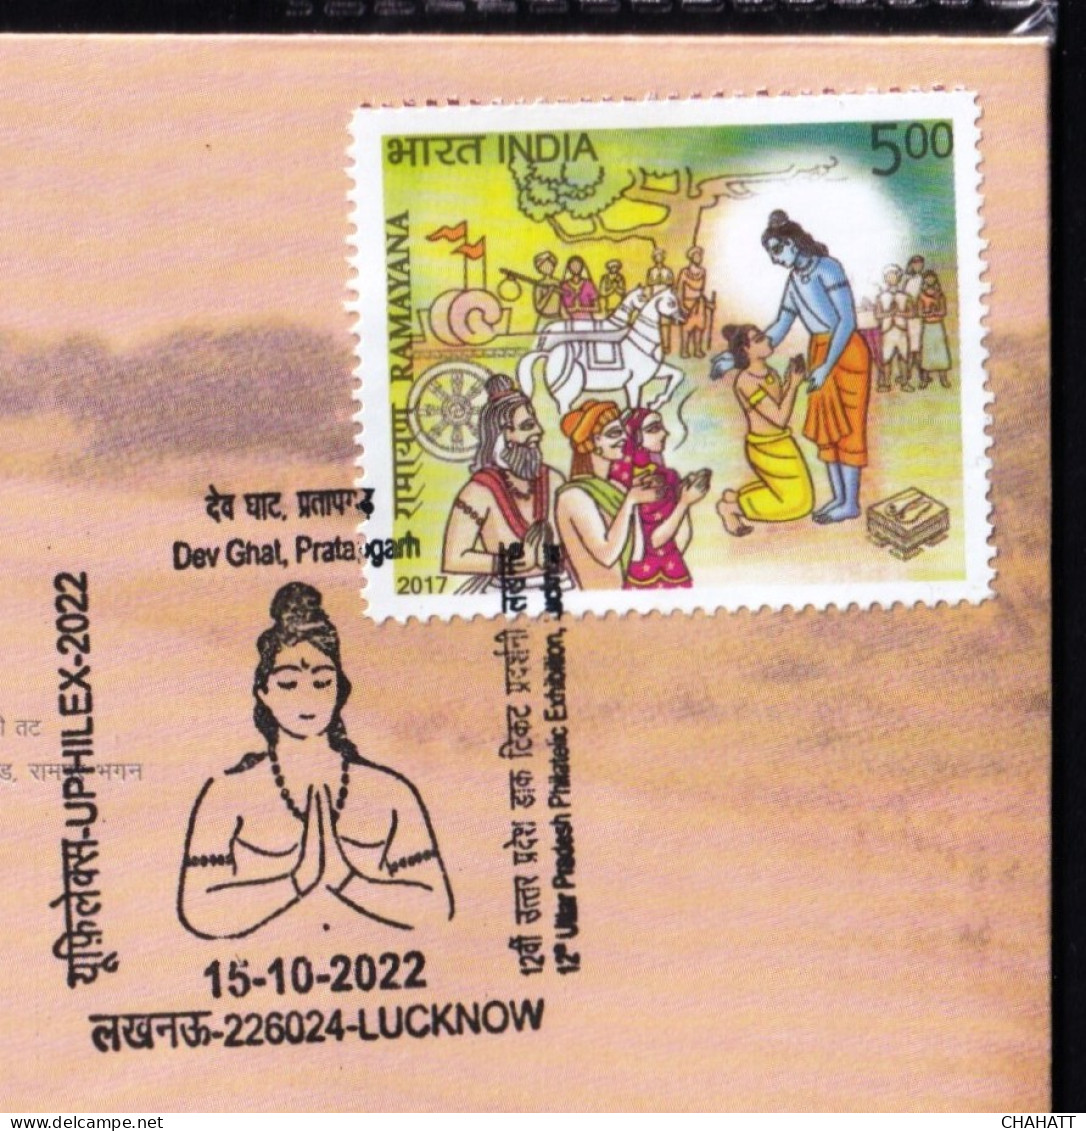 HINDUISM - RAMAYAN-  DEV GHAT, PRATAPGARH - PICTORIAL CANCELLATION - SPECIAL COVER - INDIA -2022- BX4-23 - Hinduism